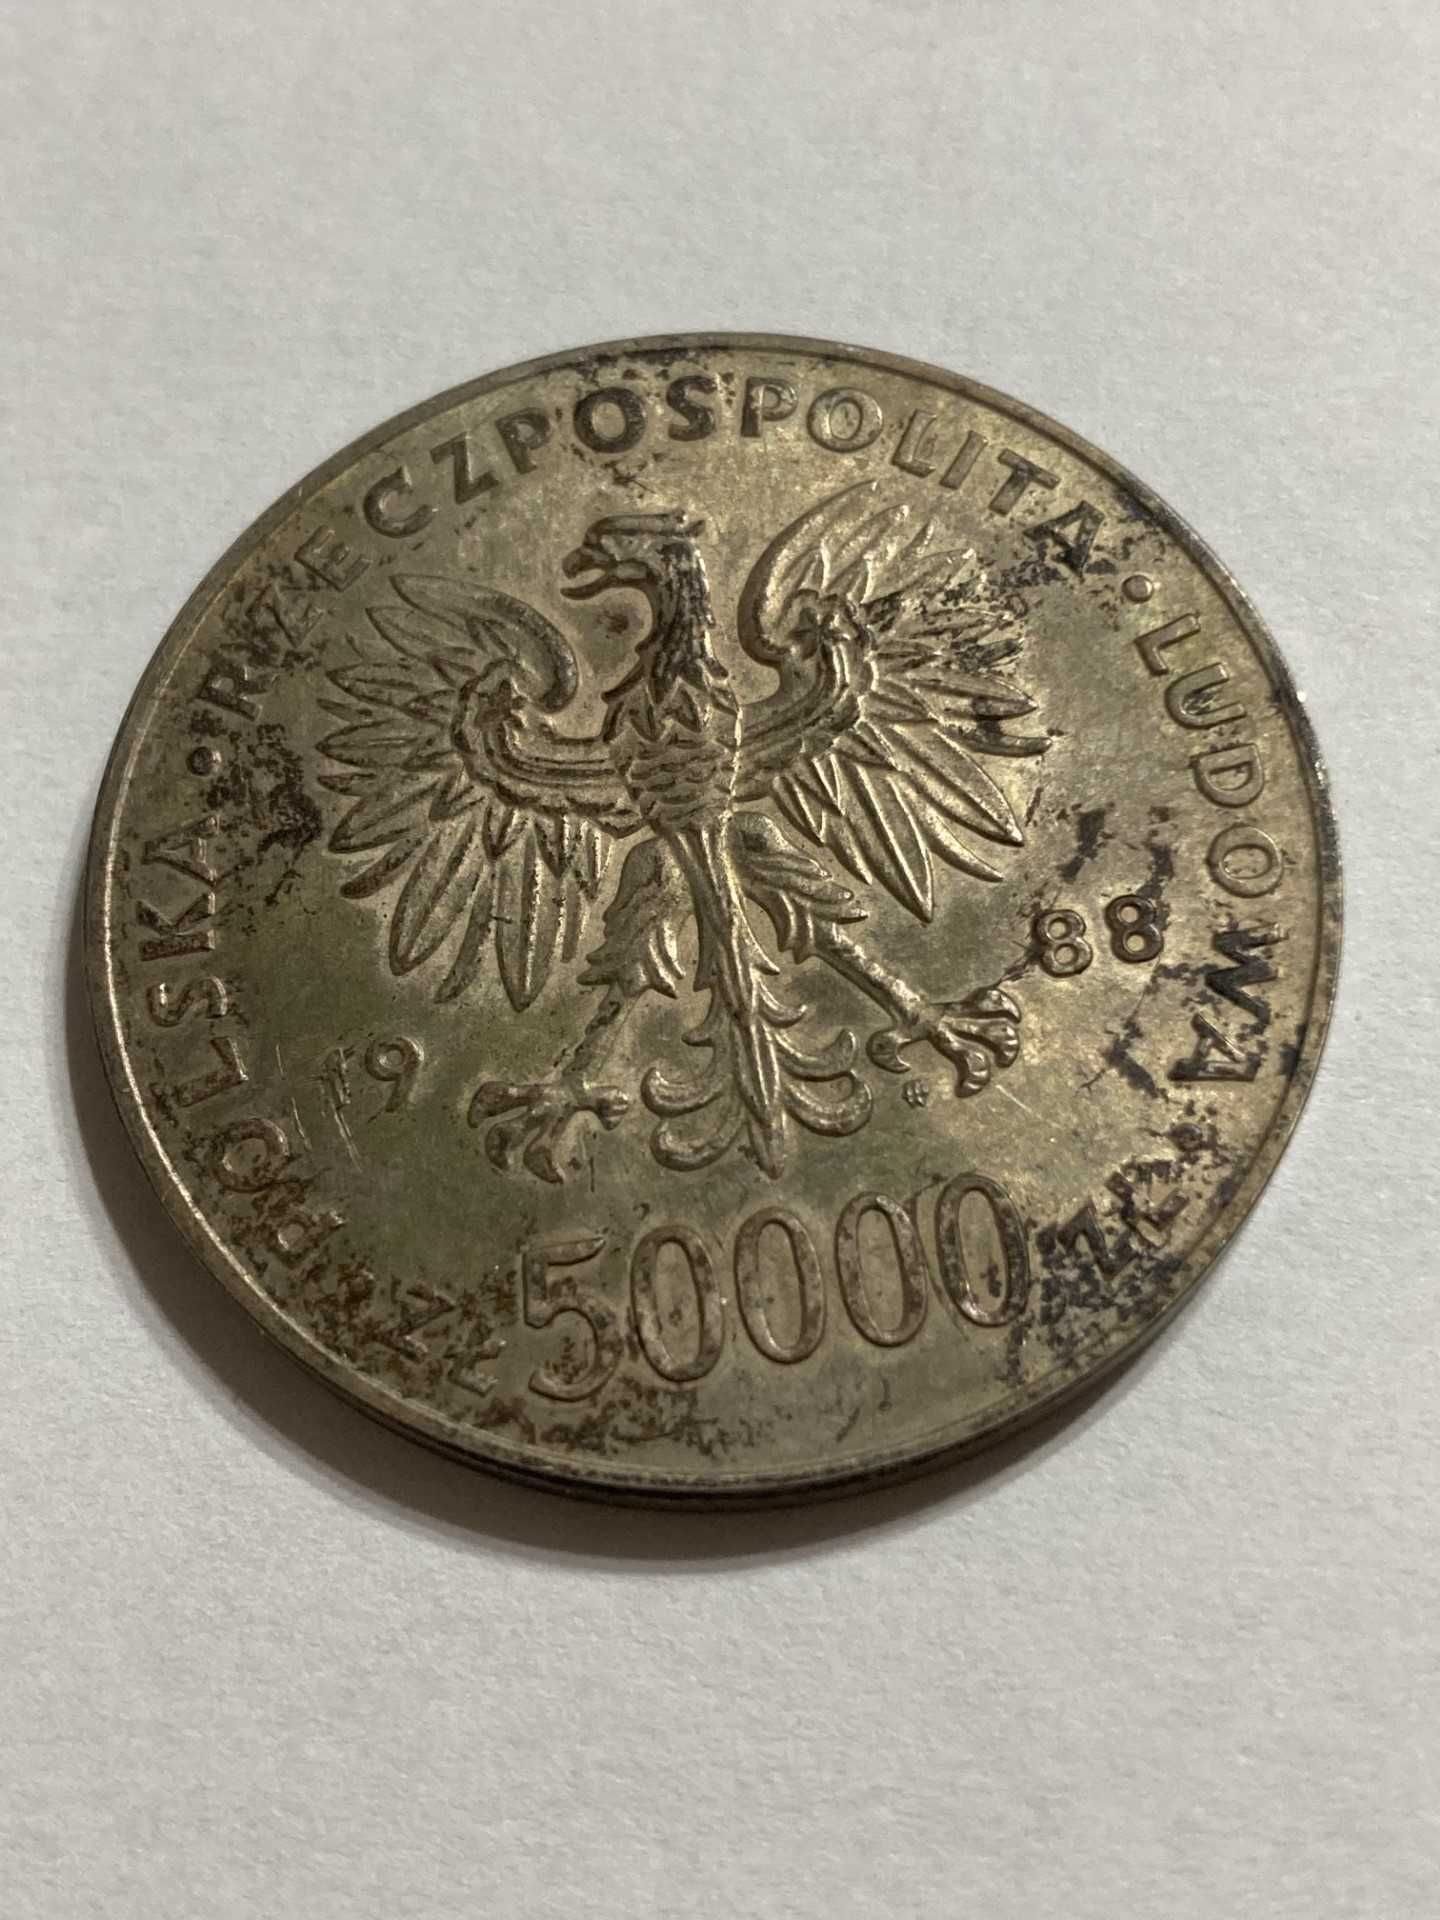 Srebrna moneta kolekcjonerska Józef Piłsudski z 1988r.